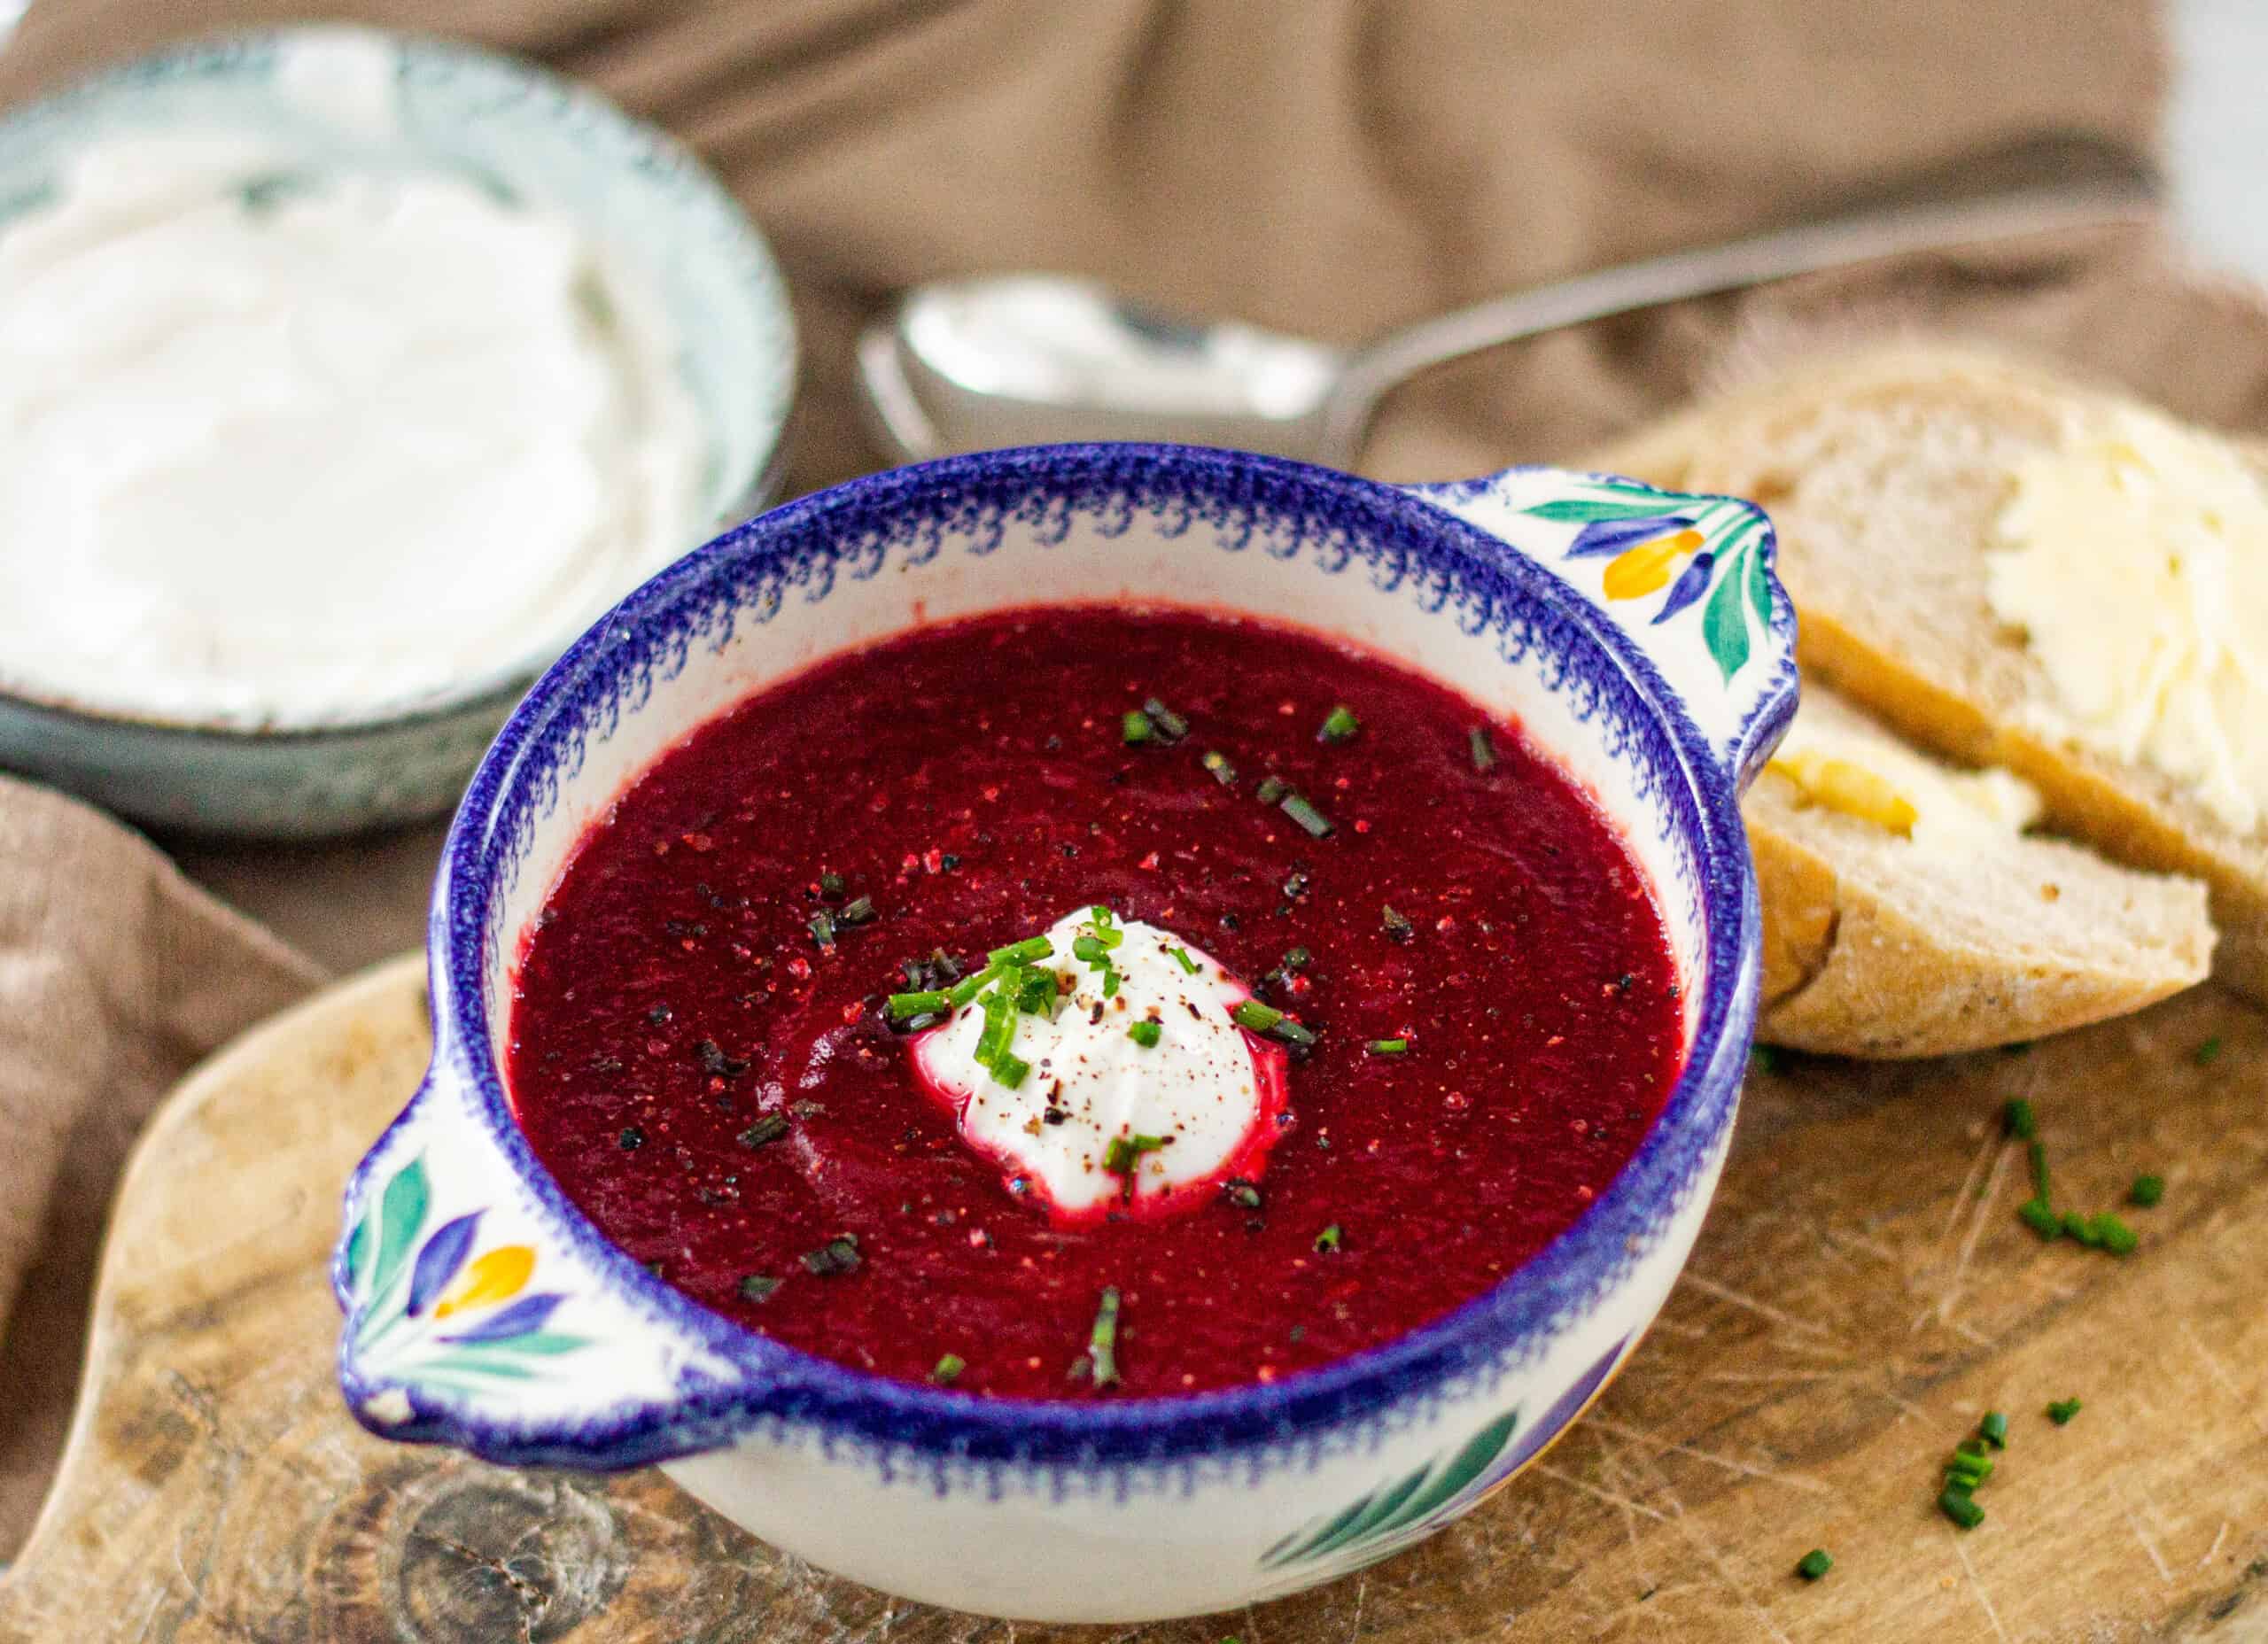 A bowl of vegan borscht with bread and yogurt